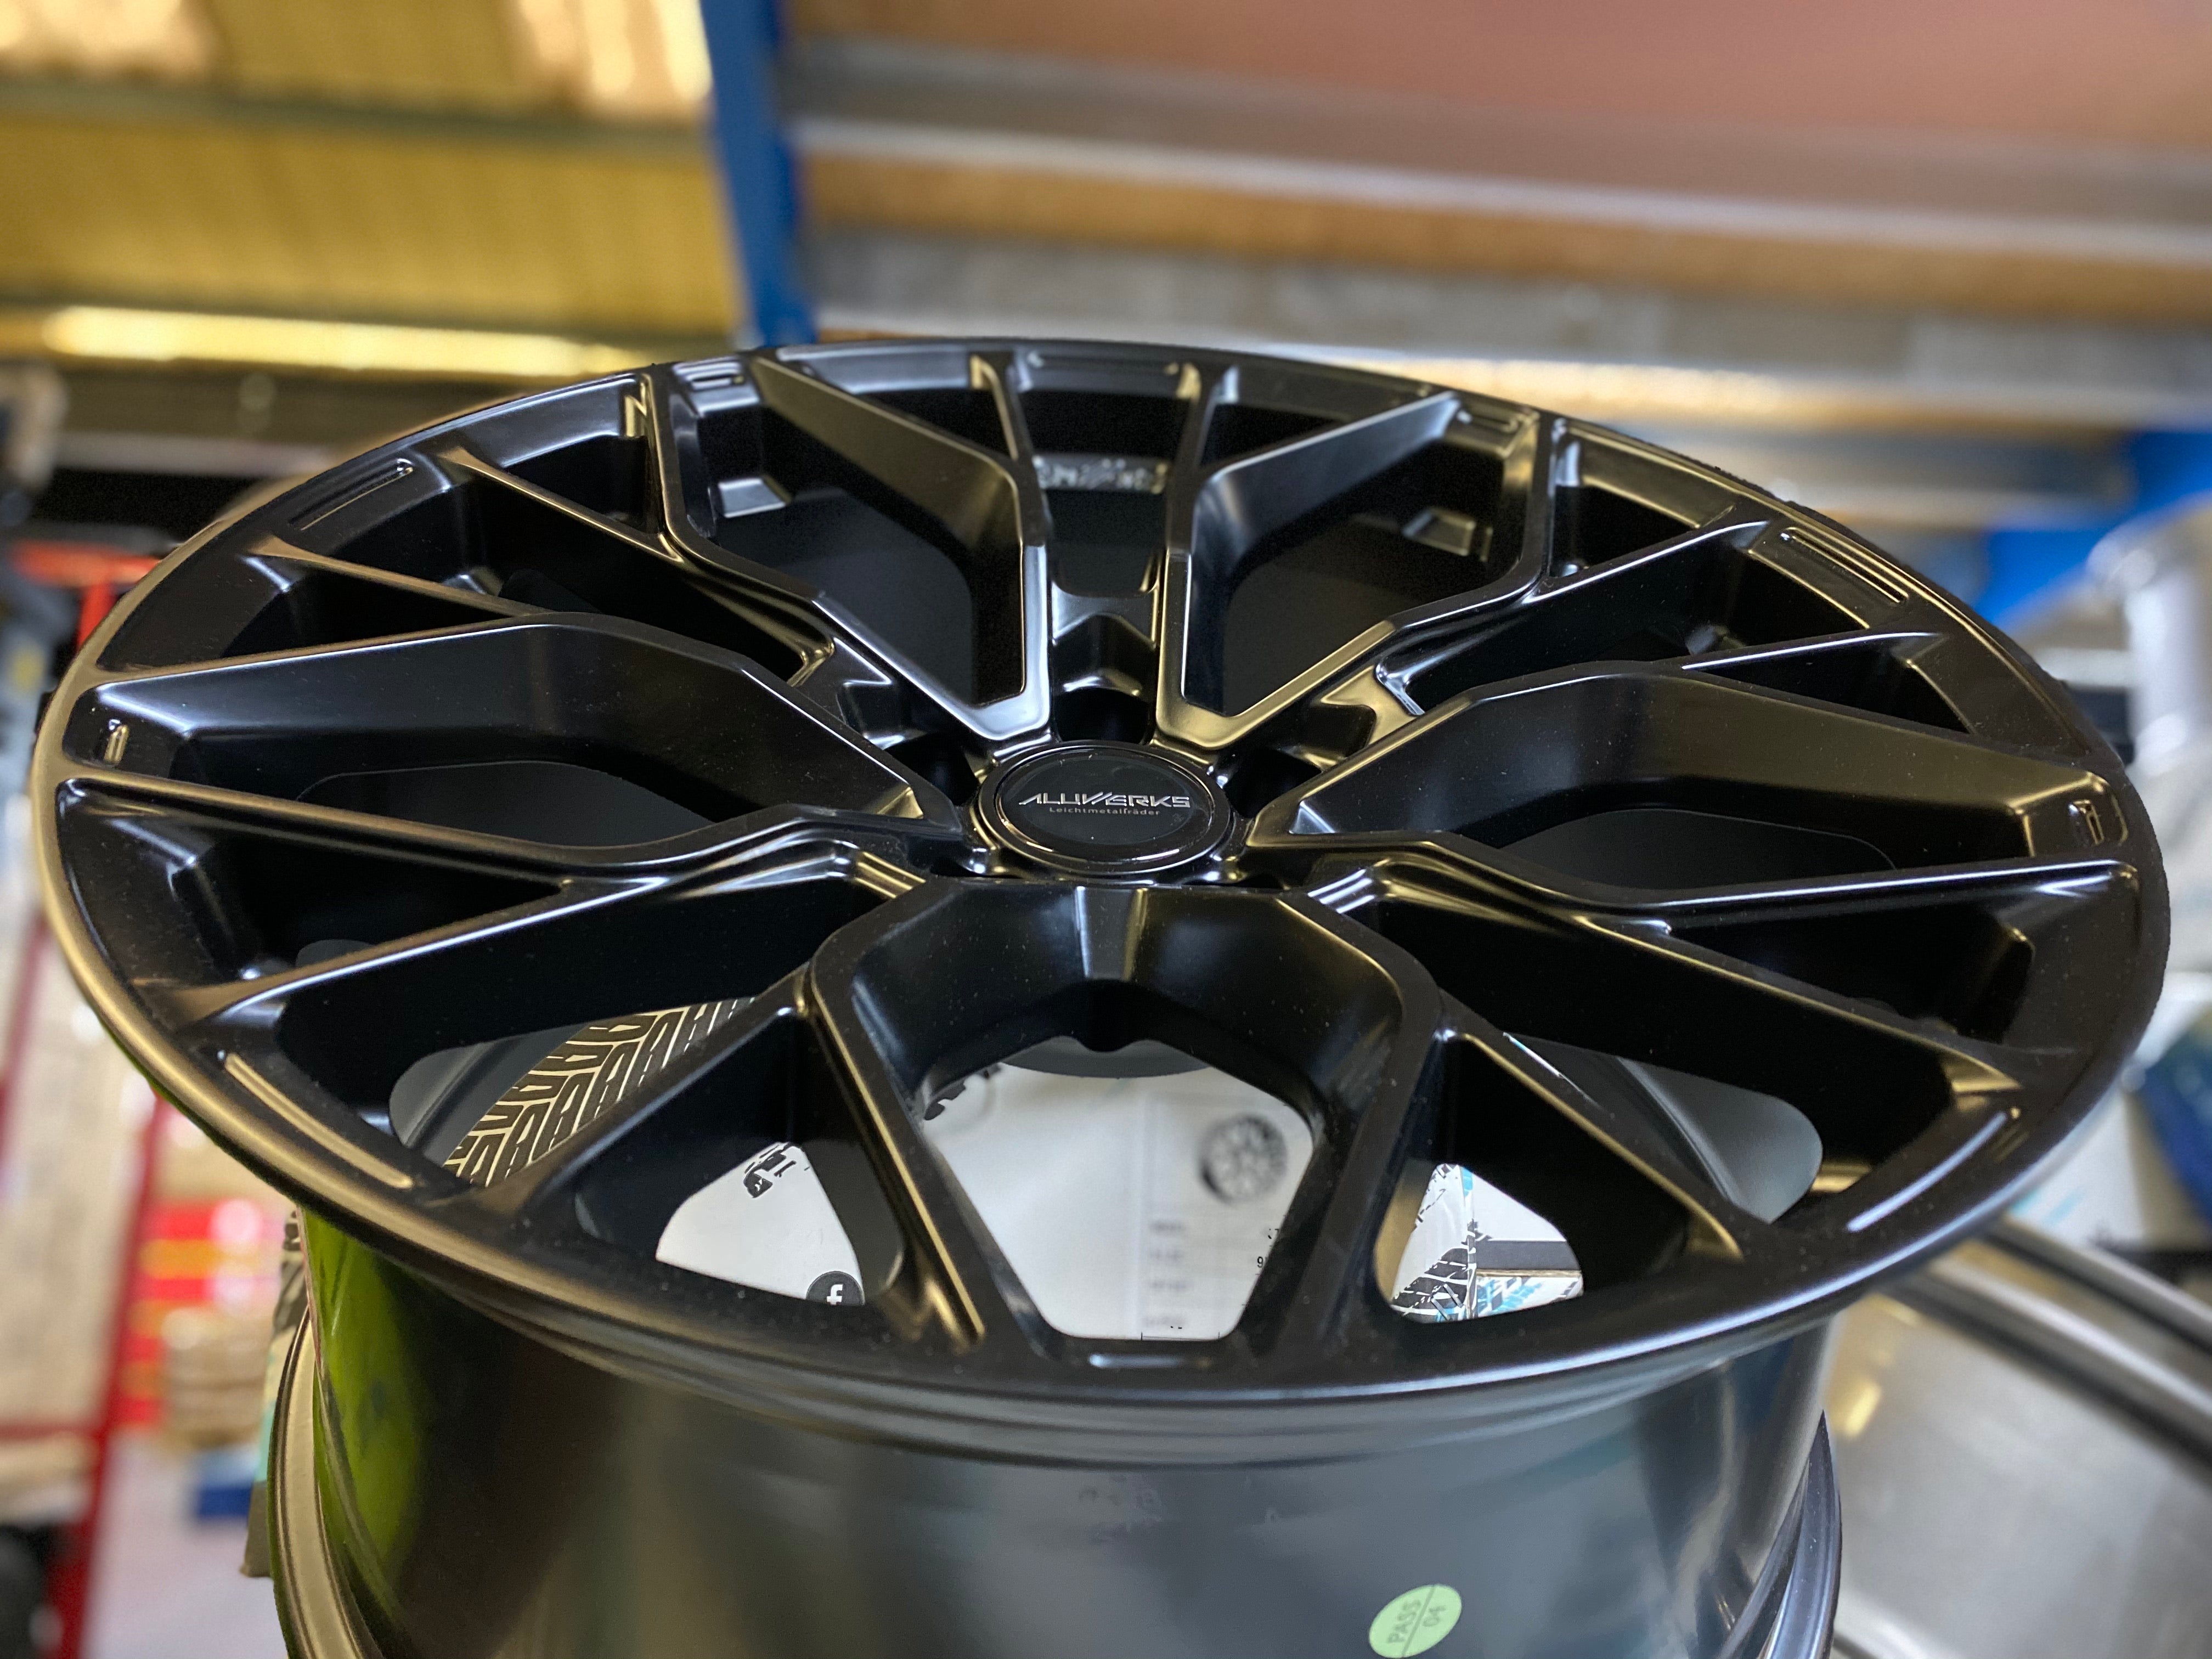 19" Aluwerks XT1 wheels Gloss Black fits Audi BMW Mercedes VW Ford Vauxhall